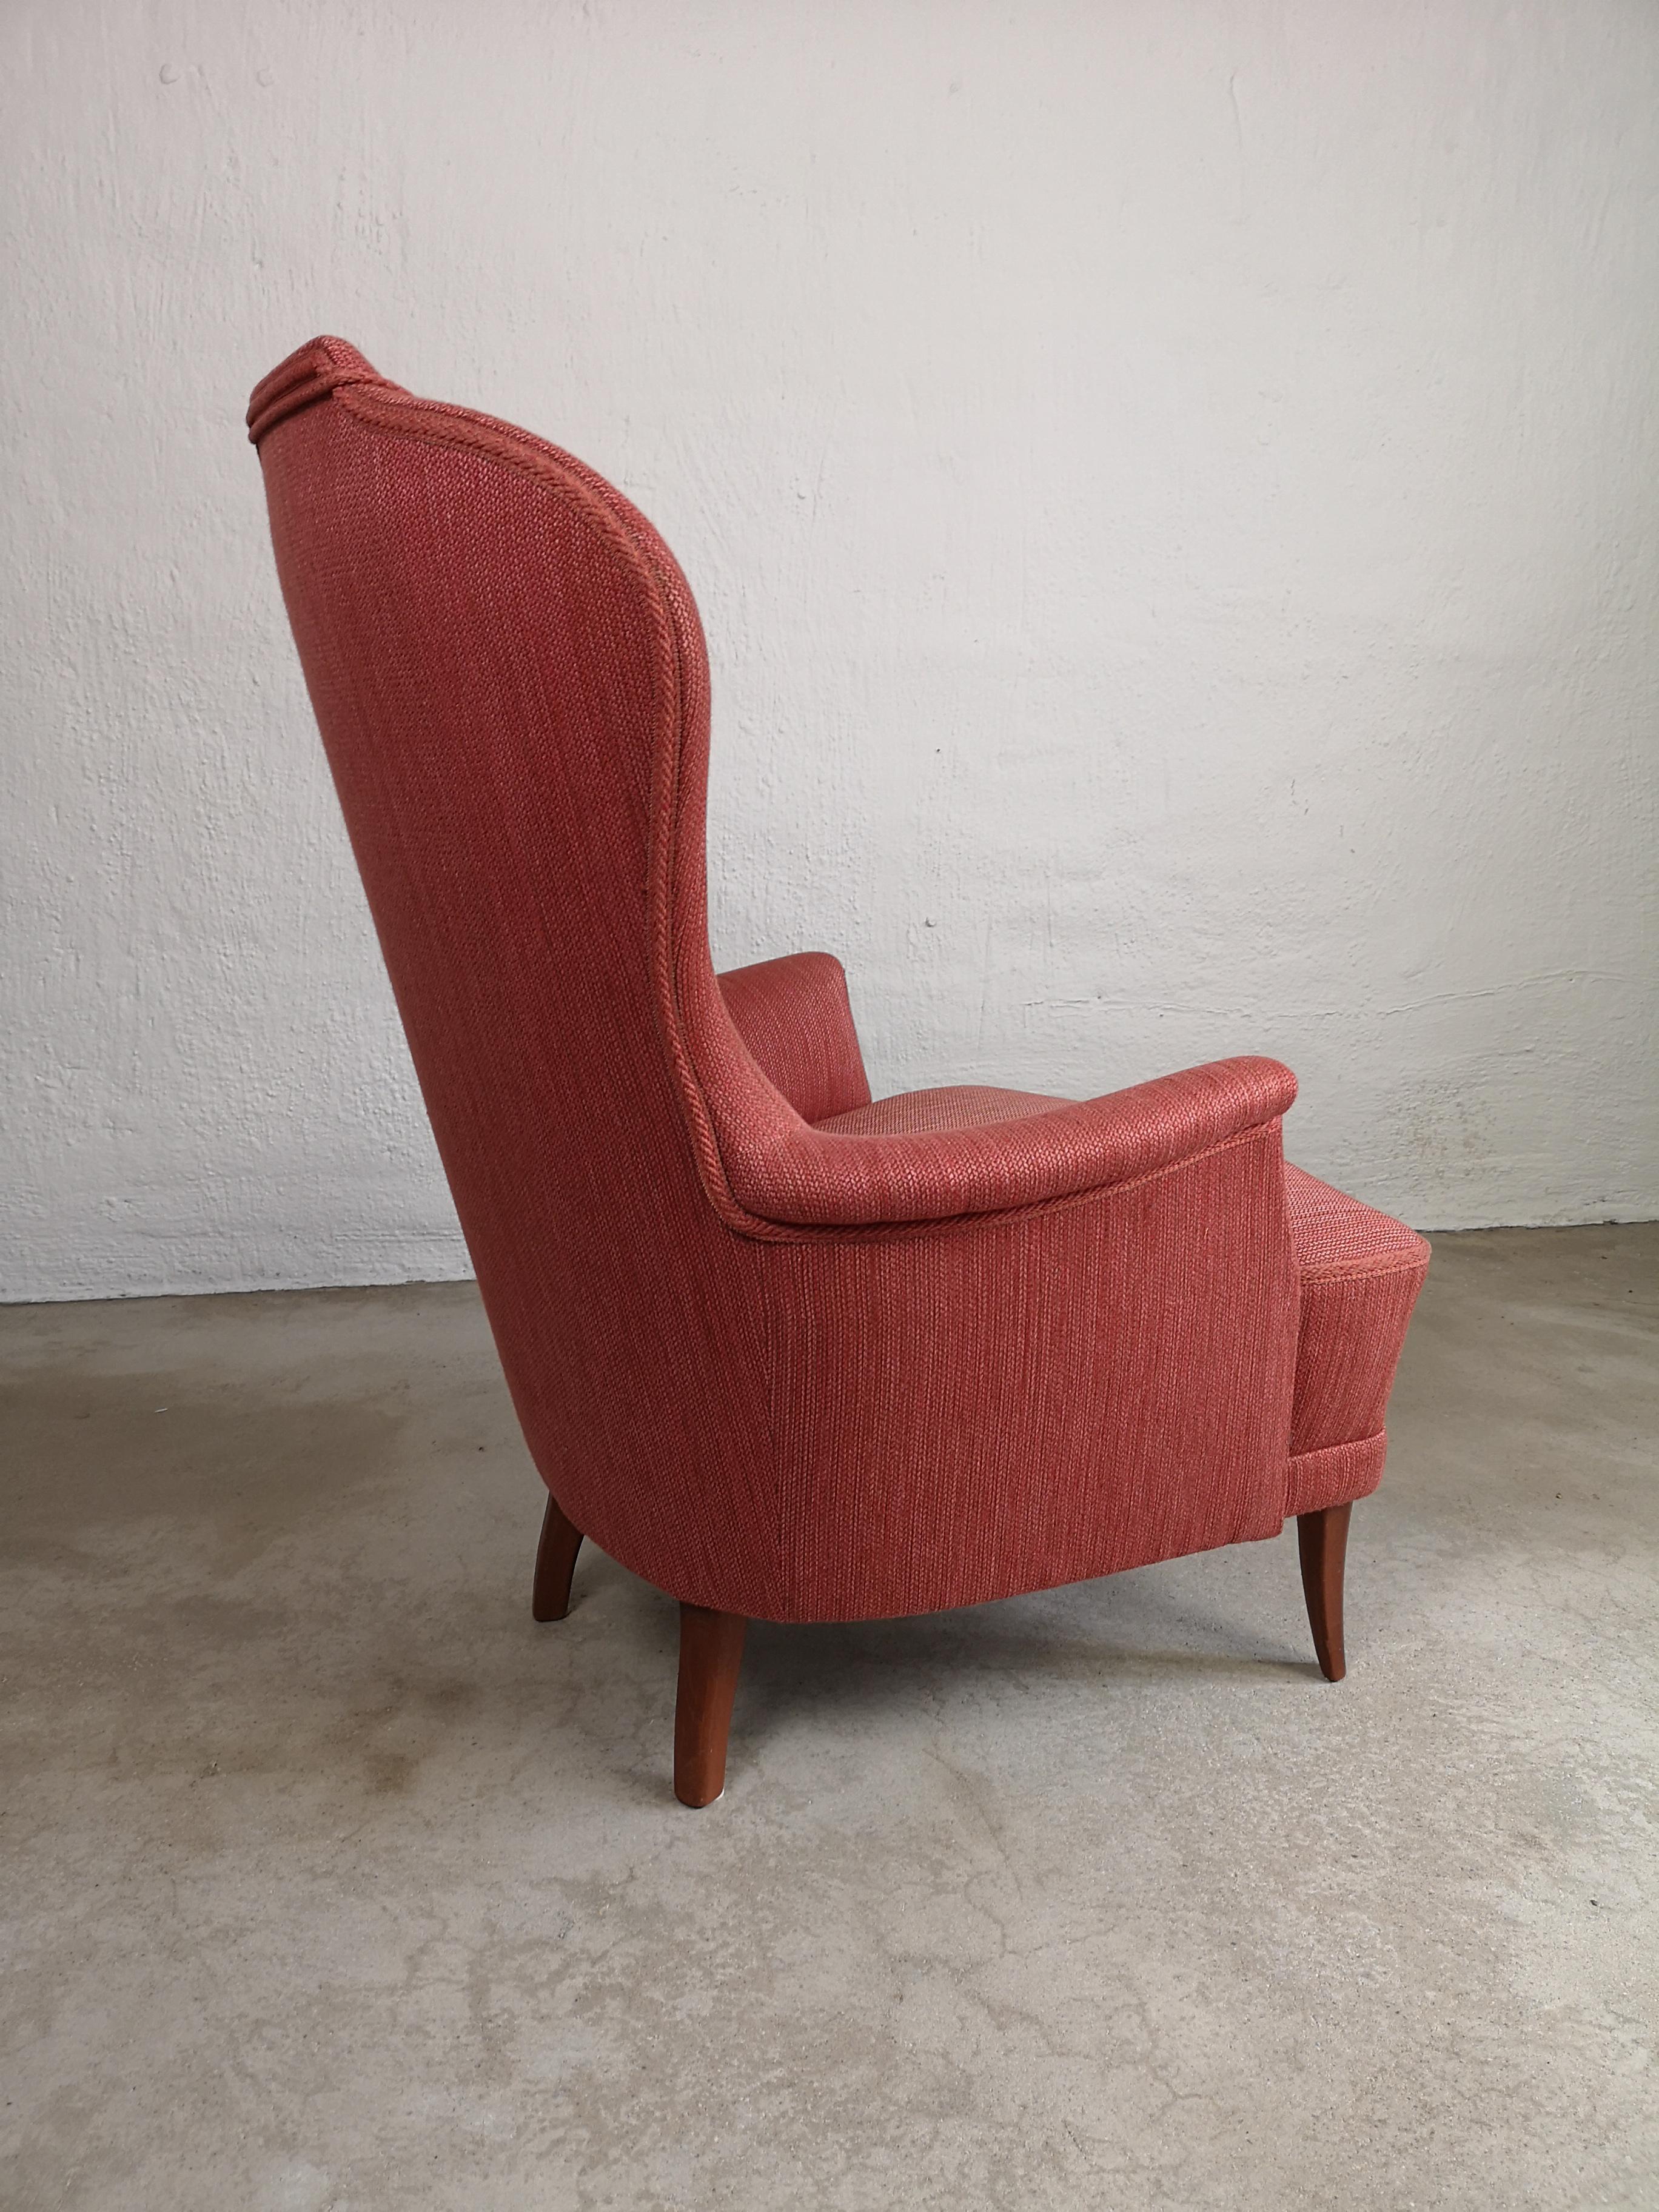 Mid-20th Century Carl Malmsten Model 'Farmor' Lounge Chair Scandinavian Midcentury